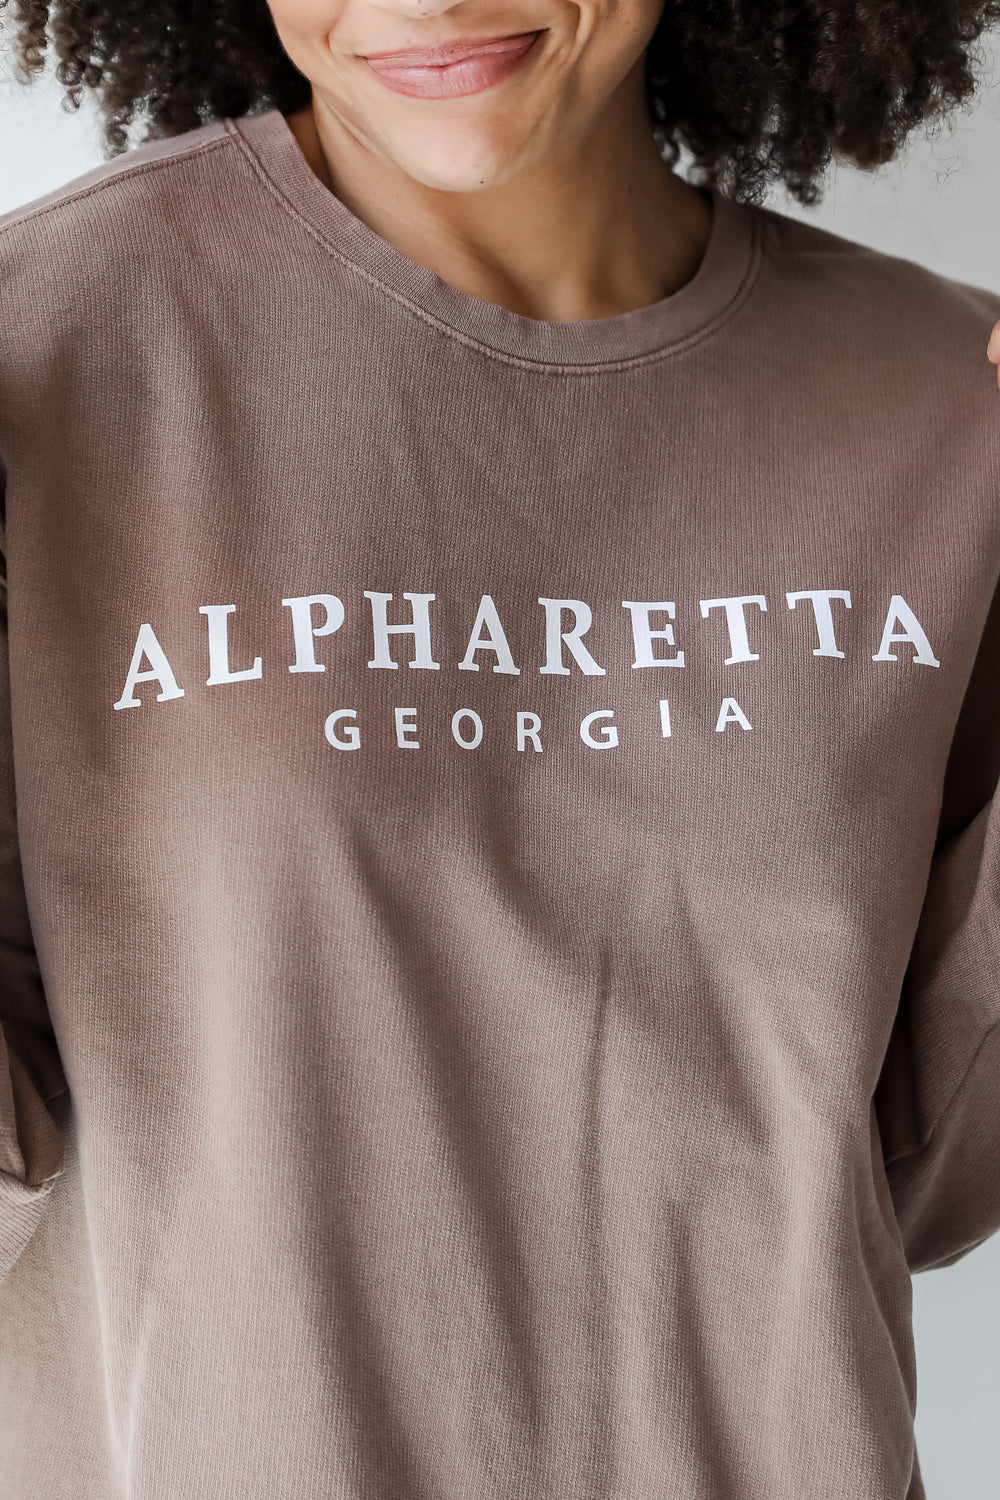 Brown Alpharetta Georgia Sweatshirt